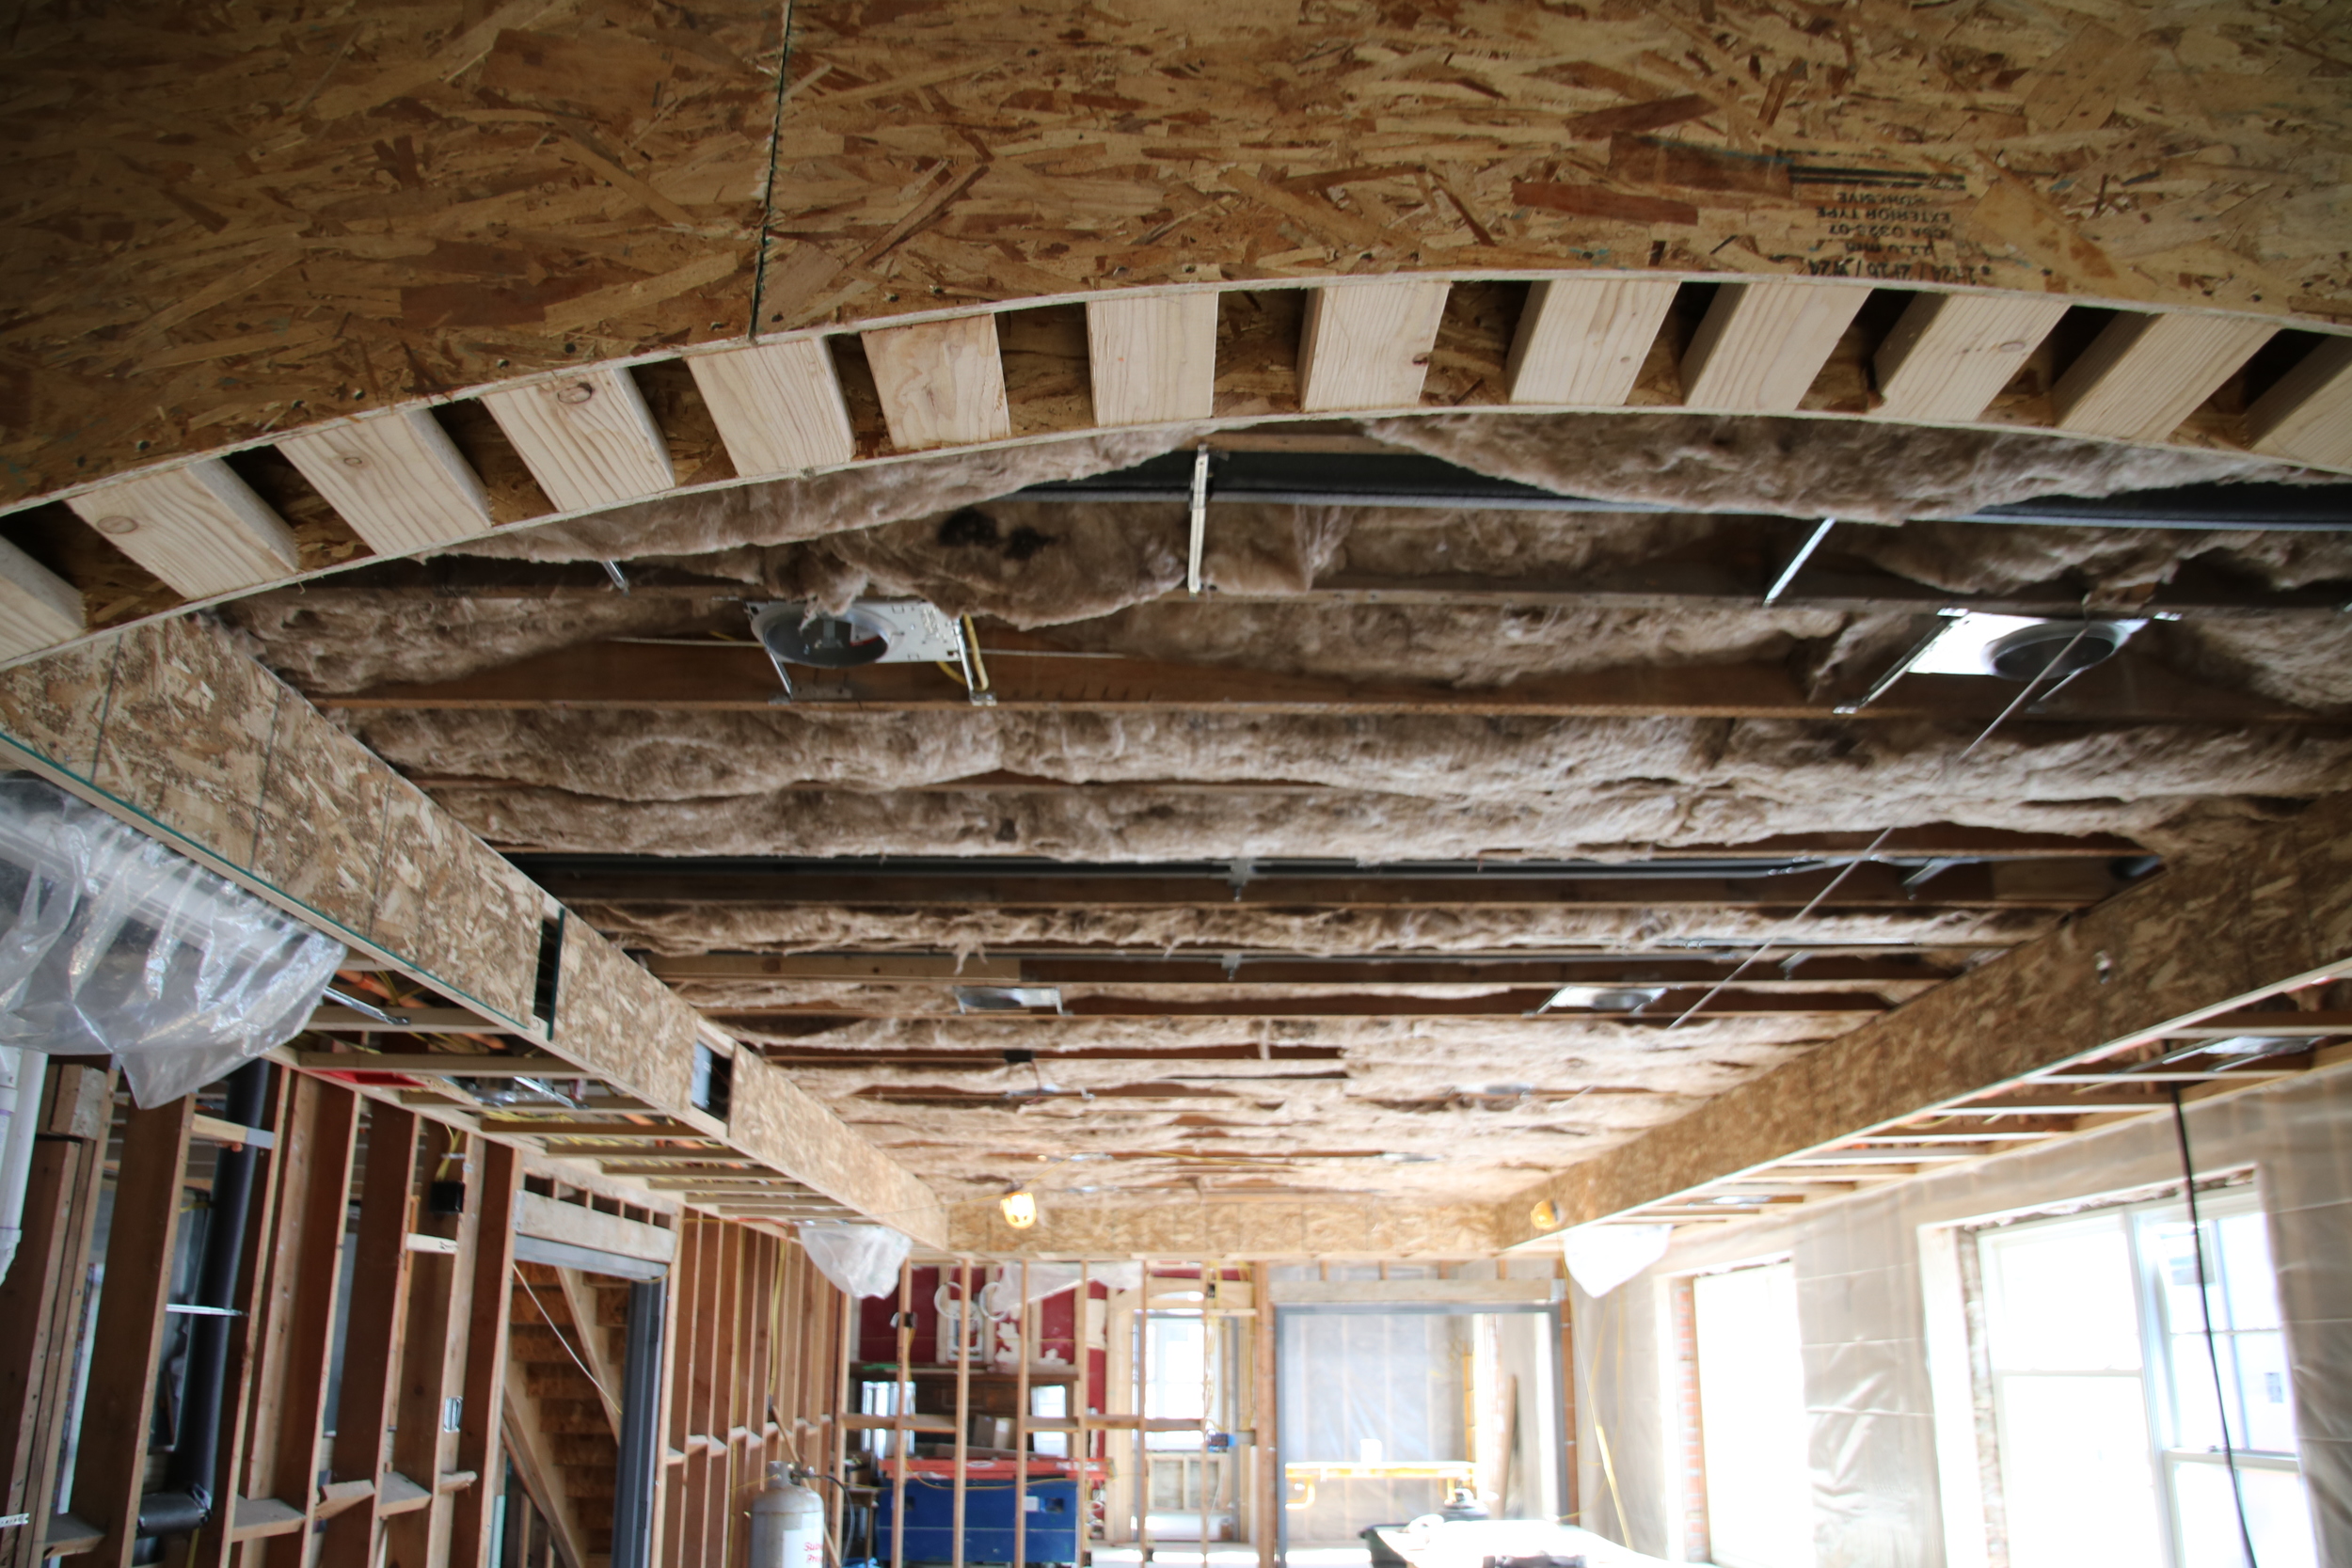 2015-11-18 sound insulation dining room ceiling.JPG